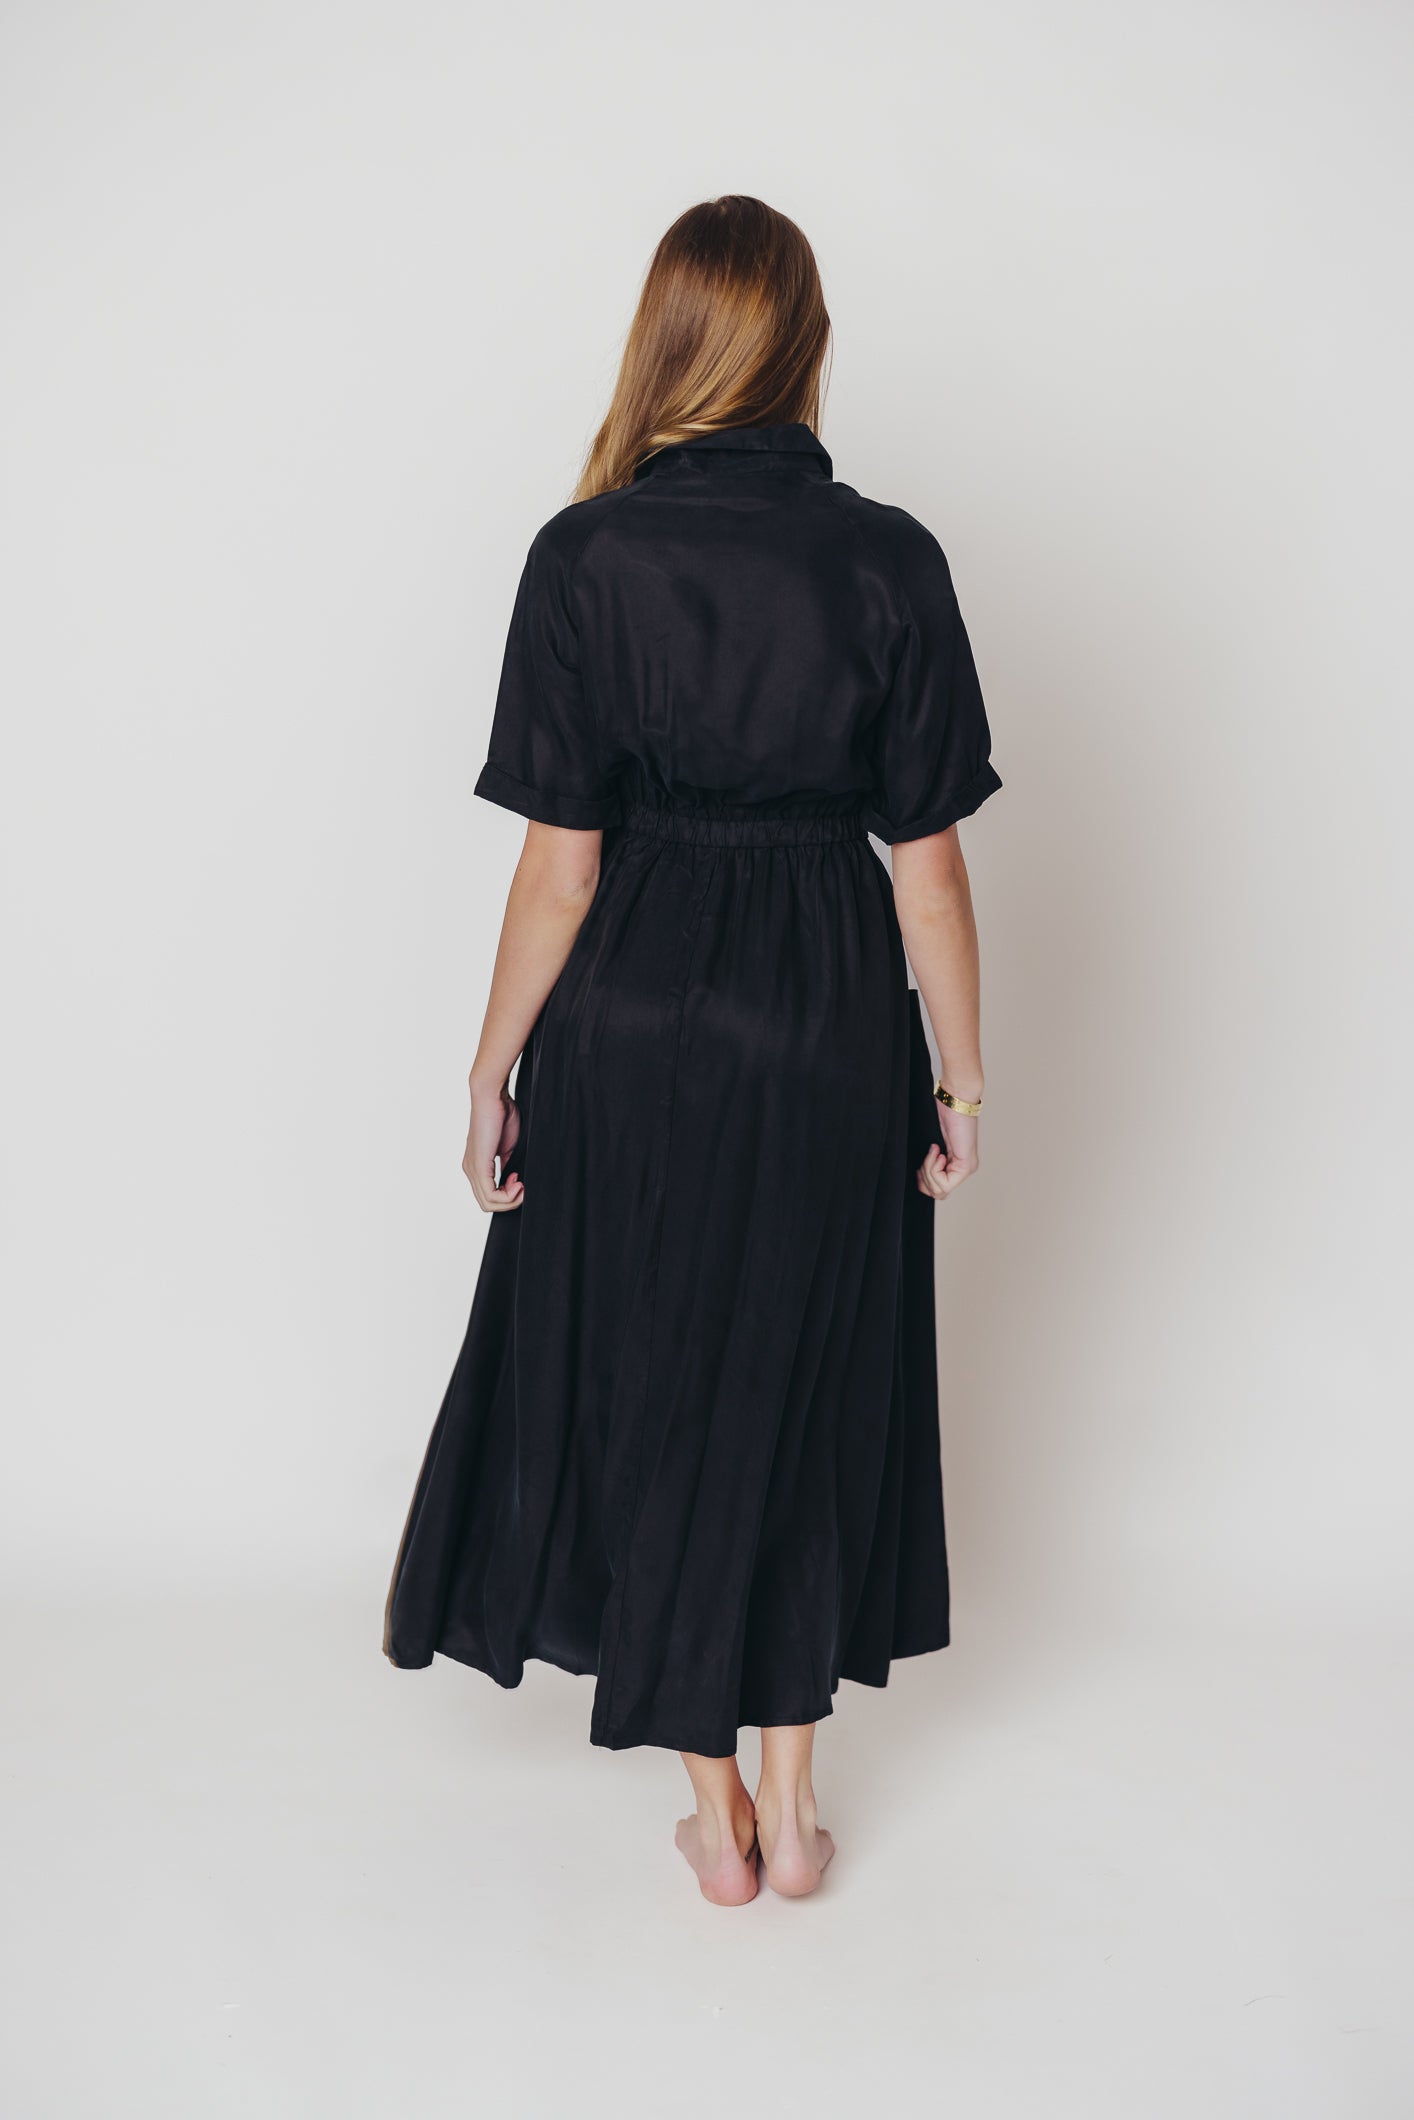 Alexis Viscose Maxi Shirt Dress in Black - Nursing Friendly